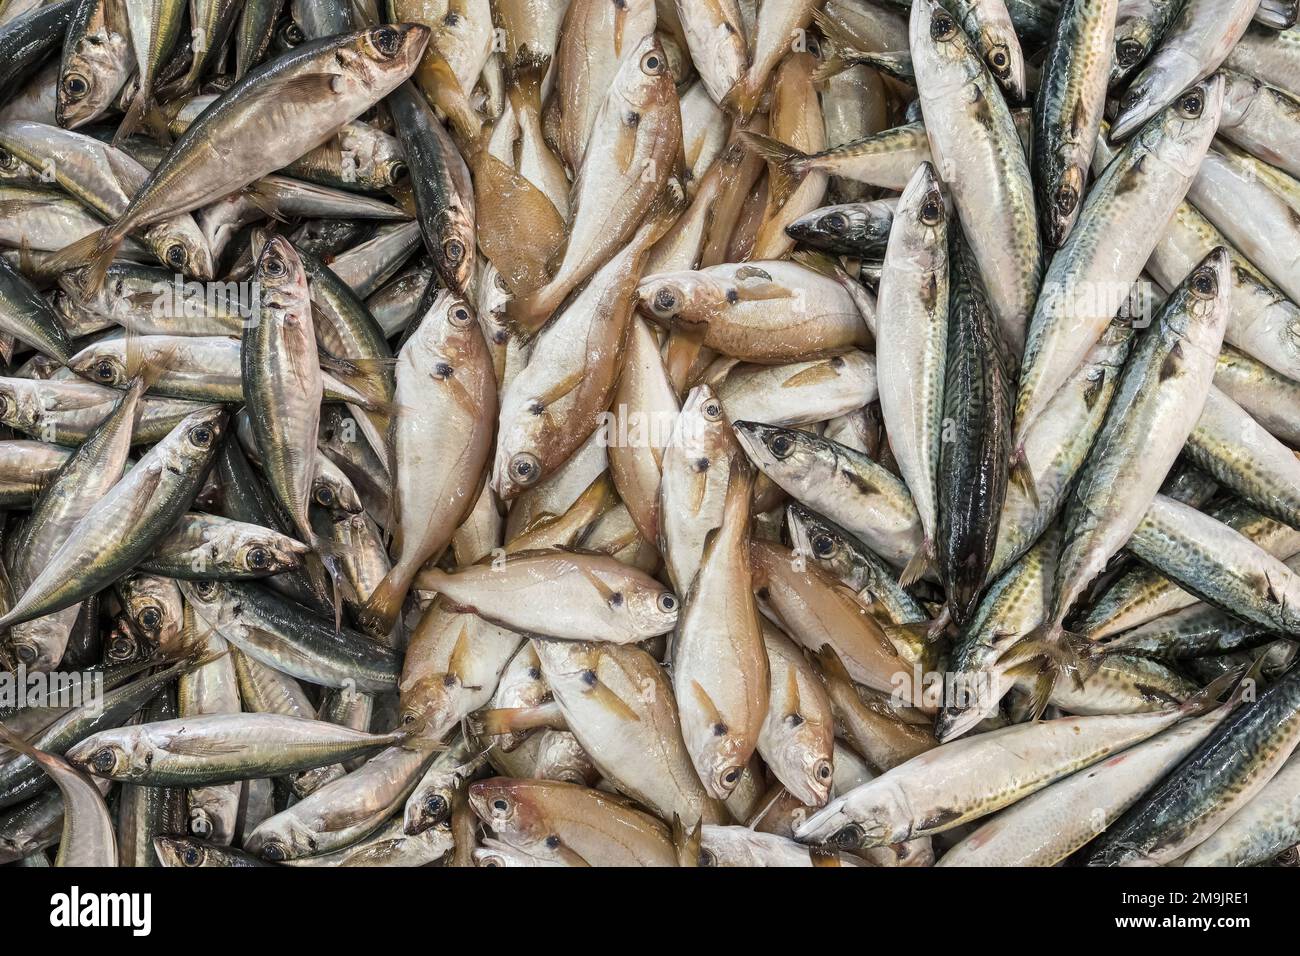 Raw fresh sea fish on a market counter. Stock Photo